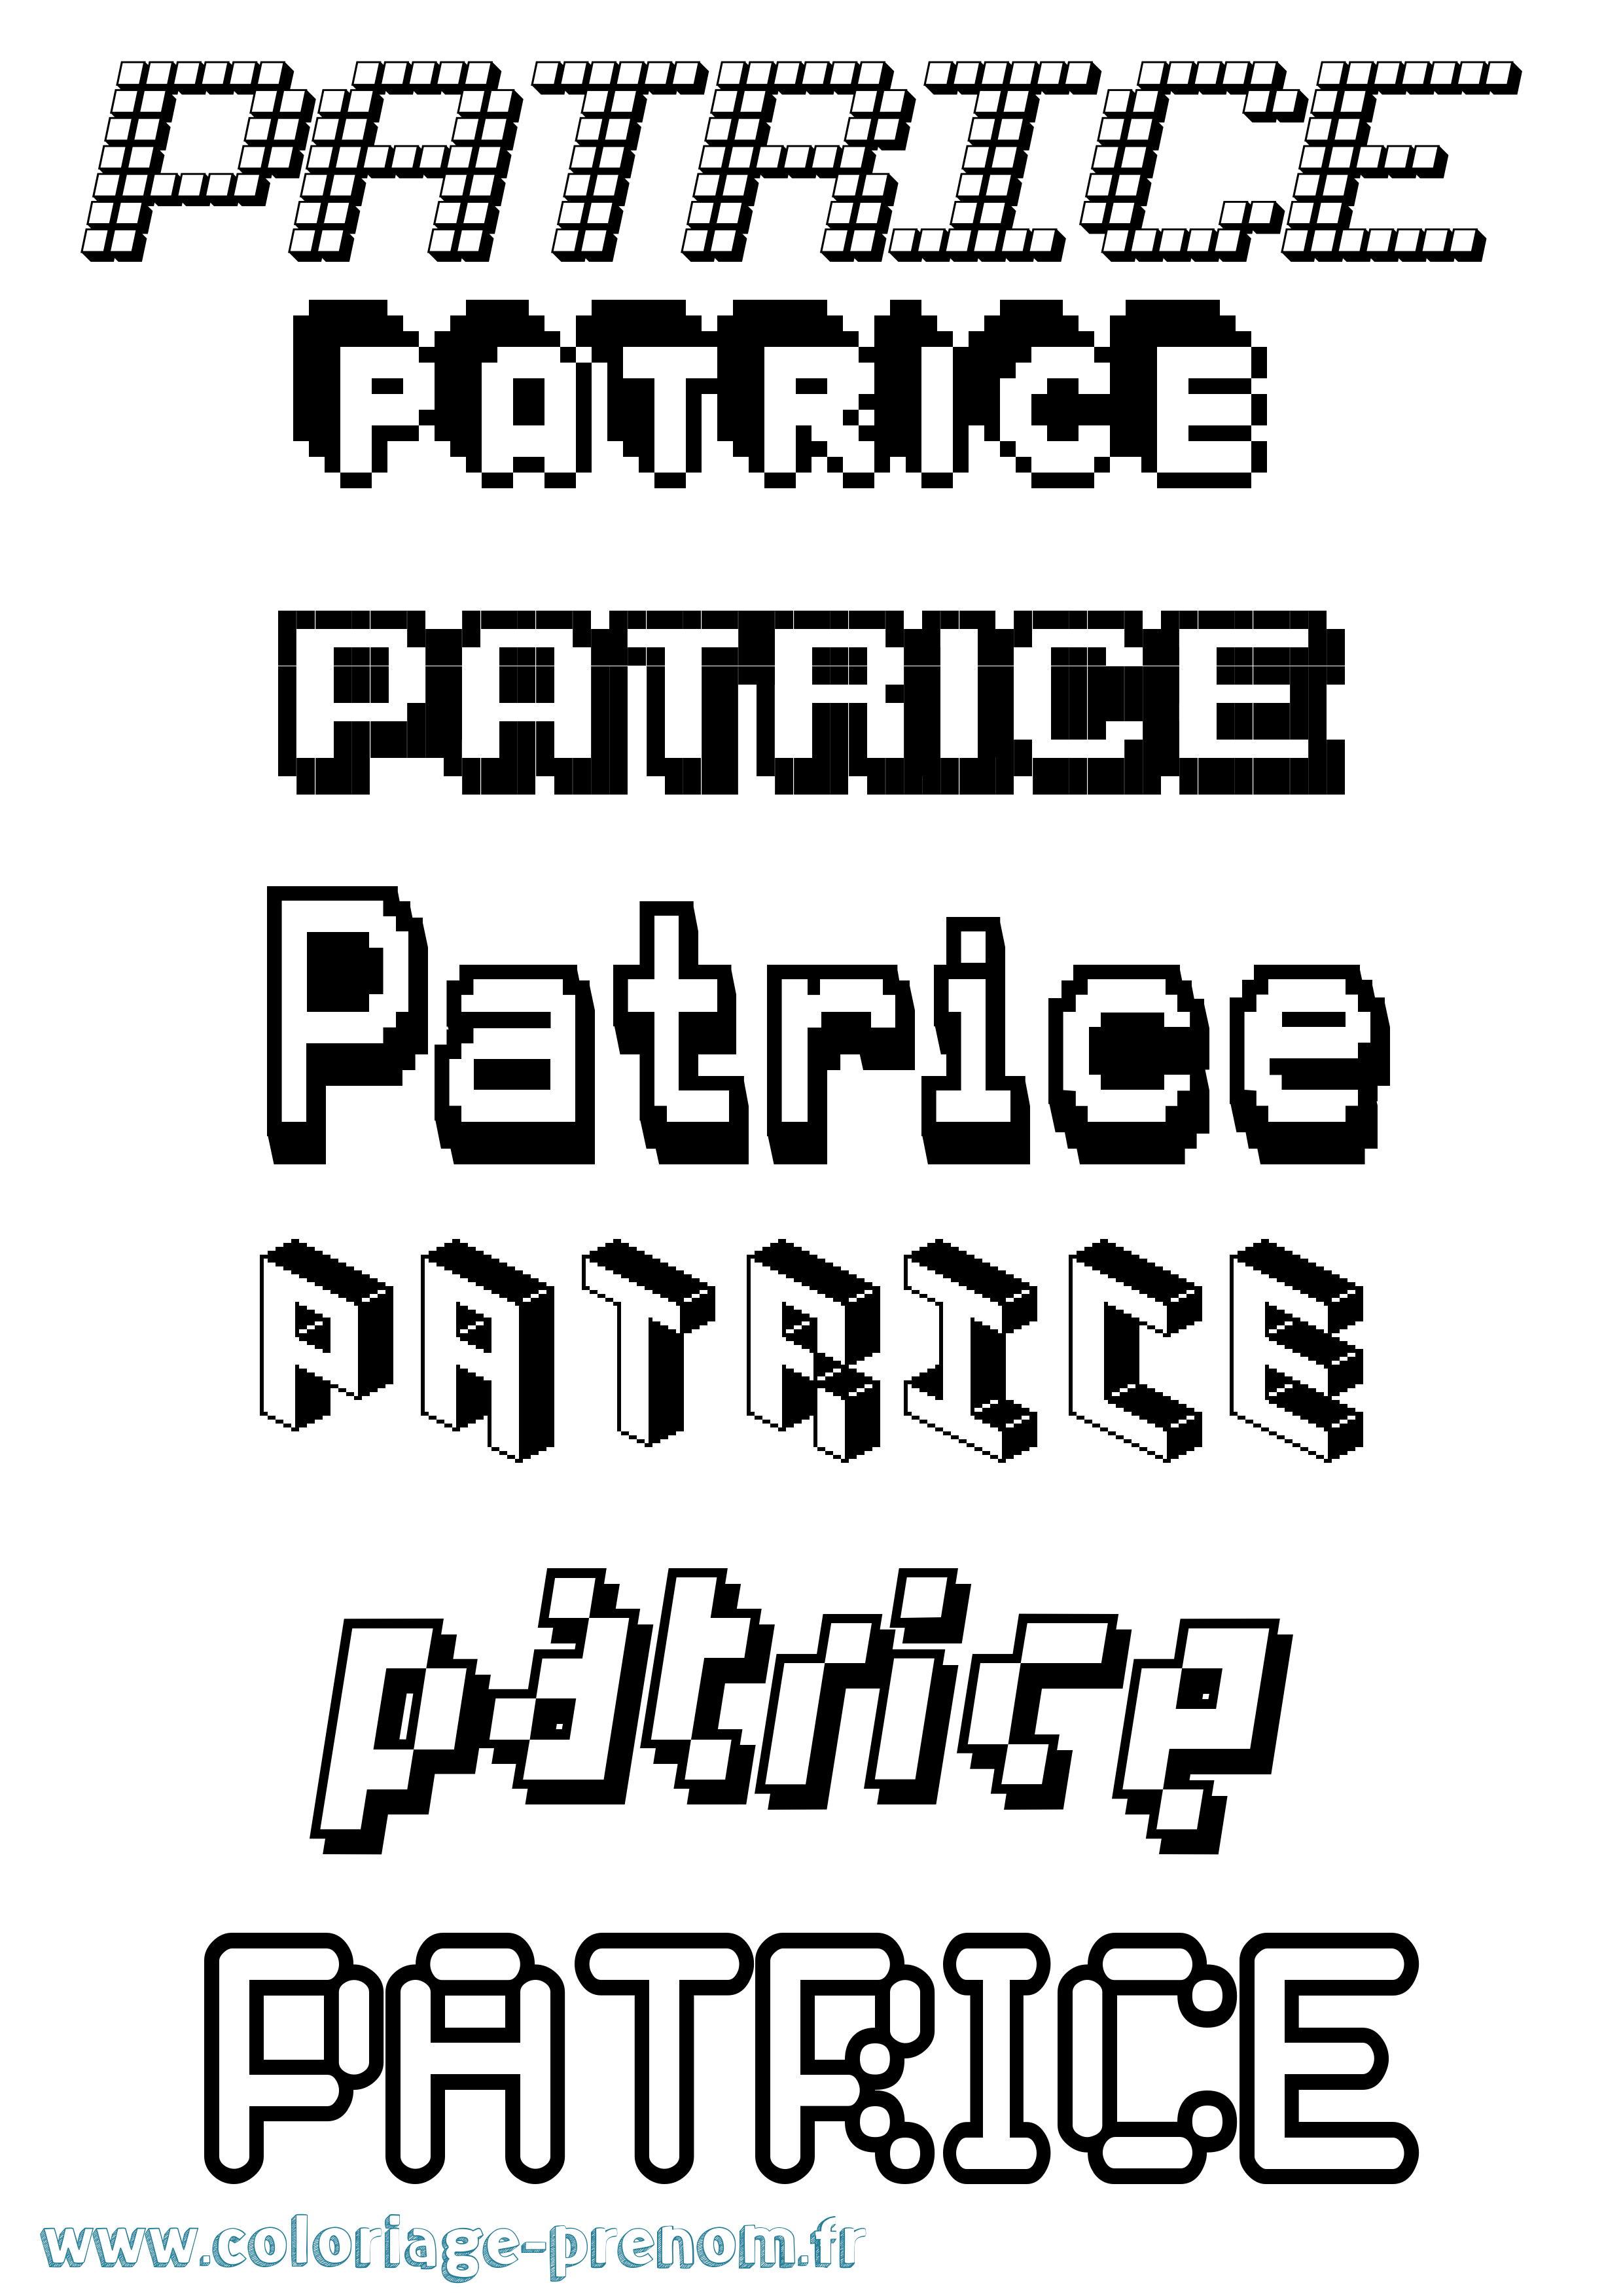 Coloriage prénom Patrice Pixel